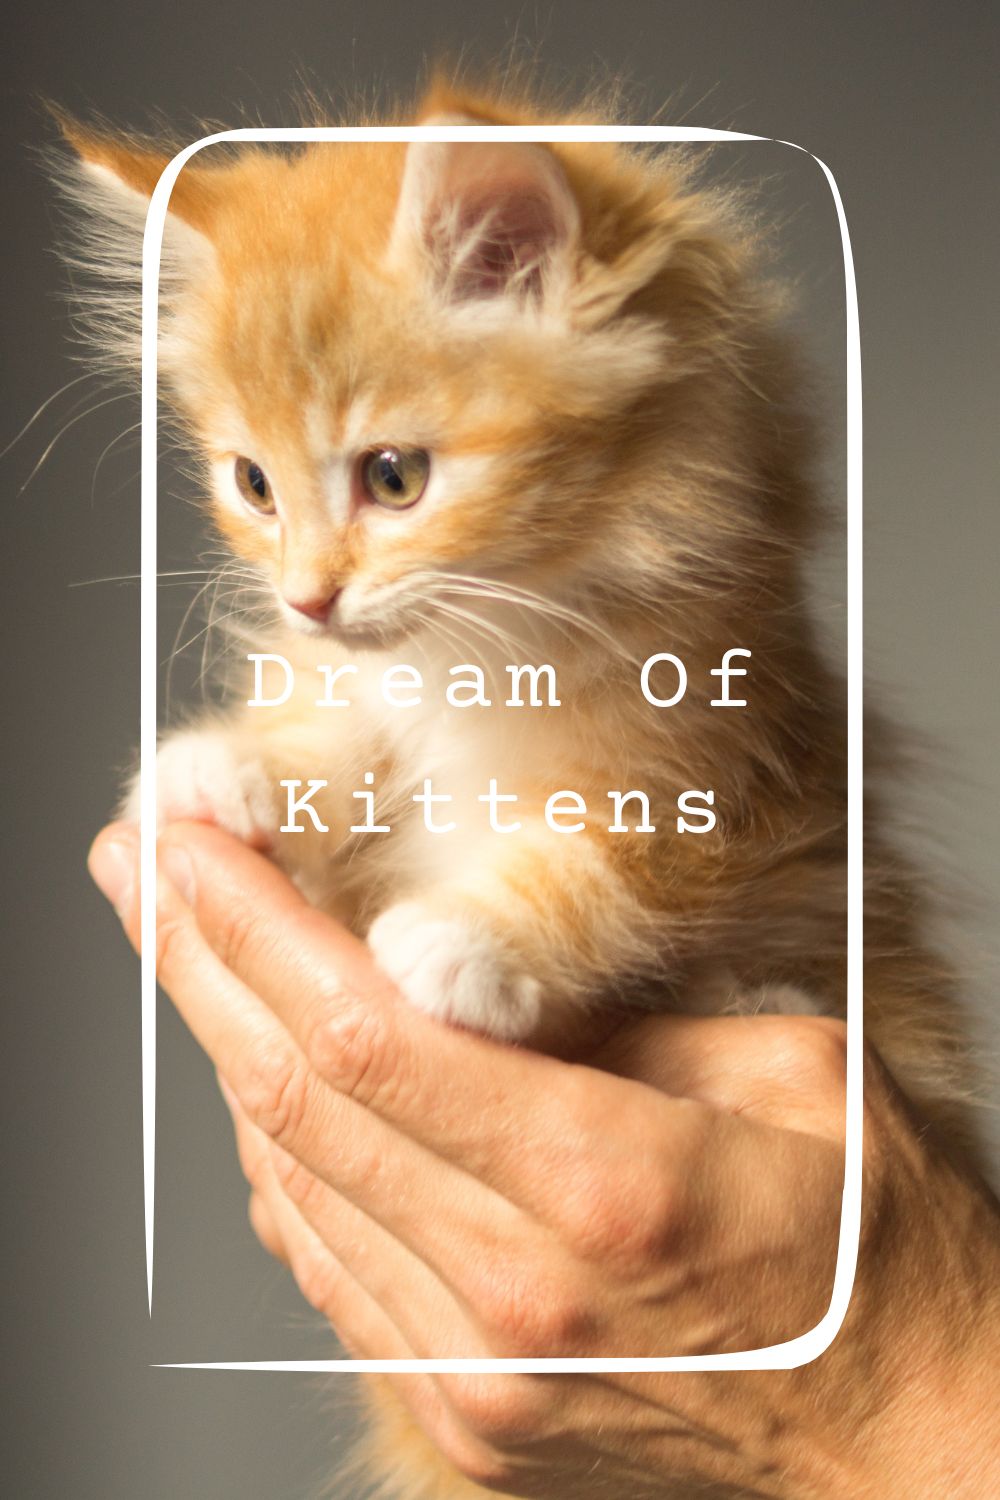 Dream Of Kittens Meanings 2